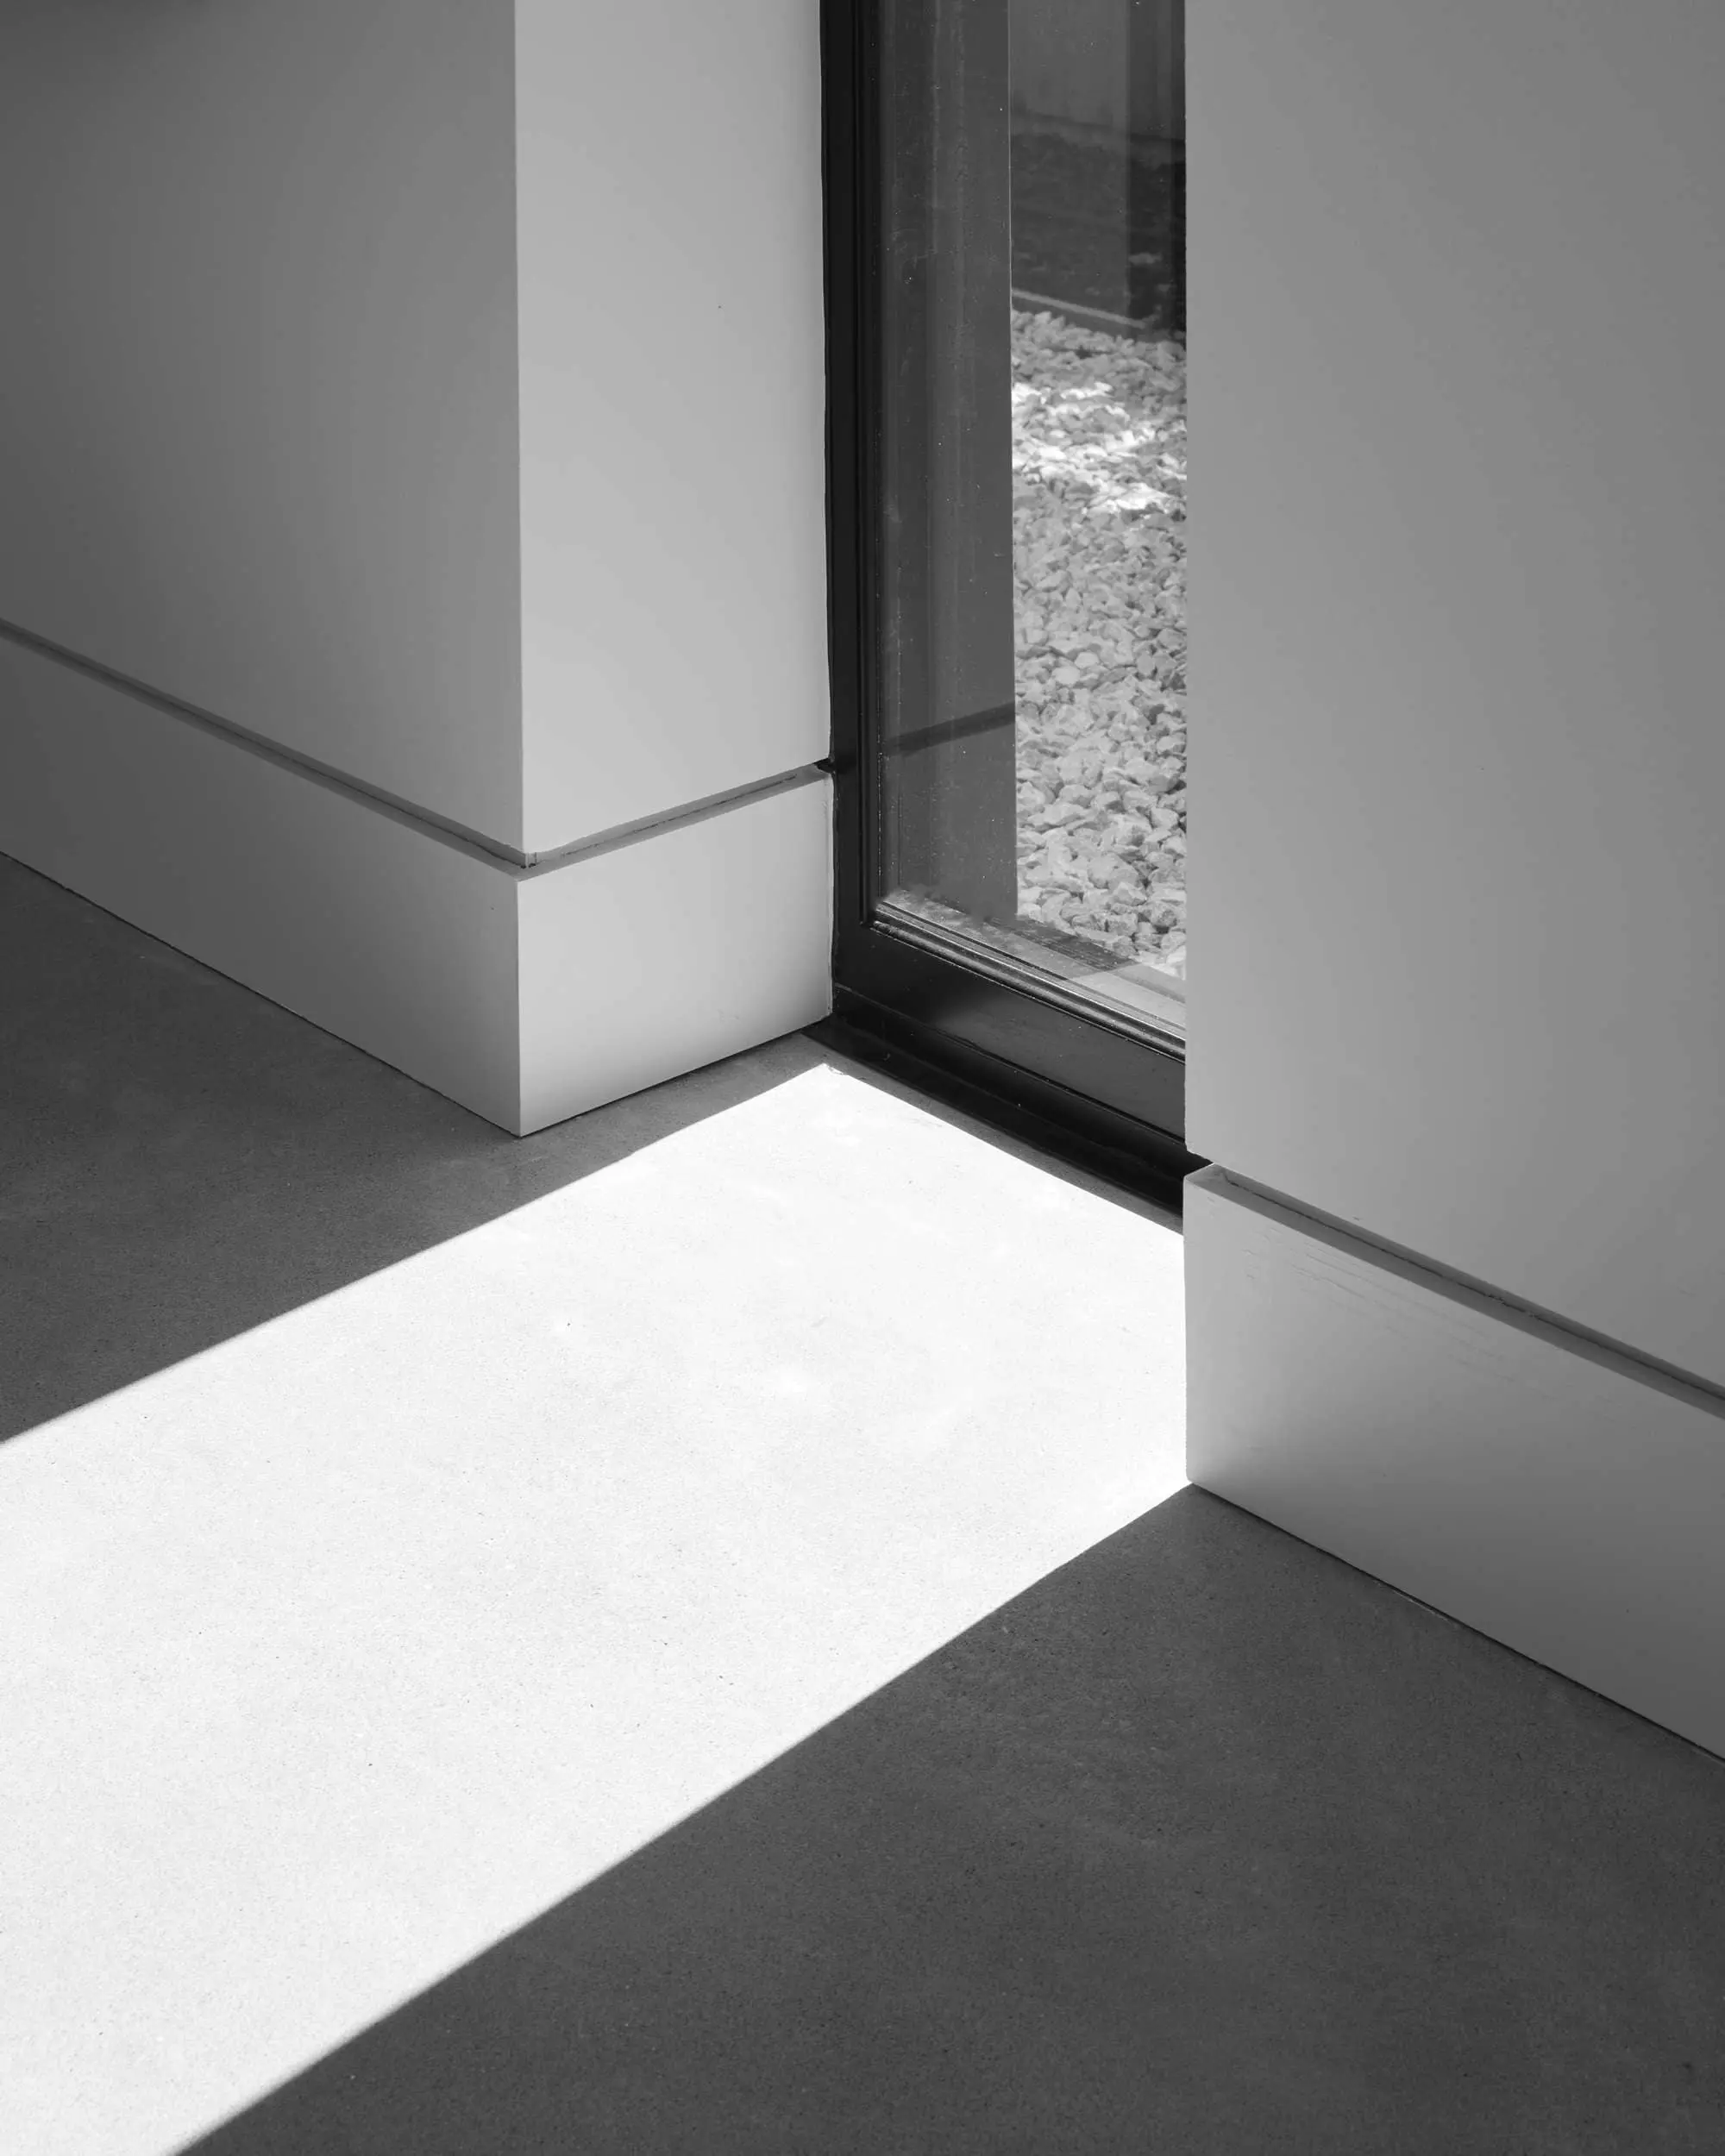 Black & white image of light casting on aluminium window.